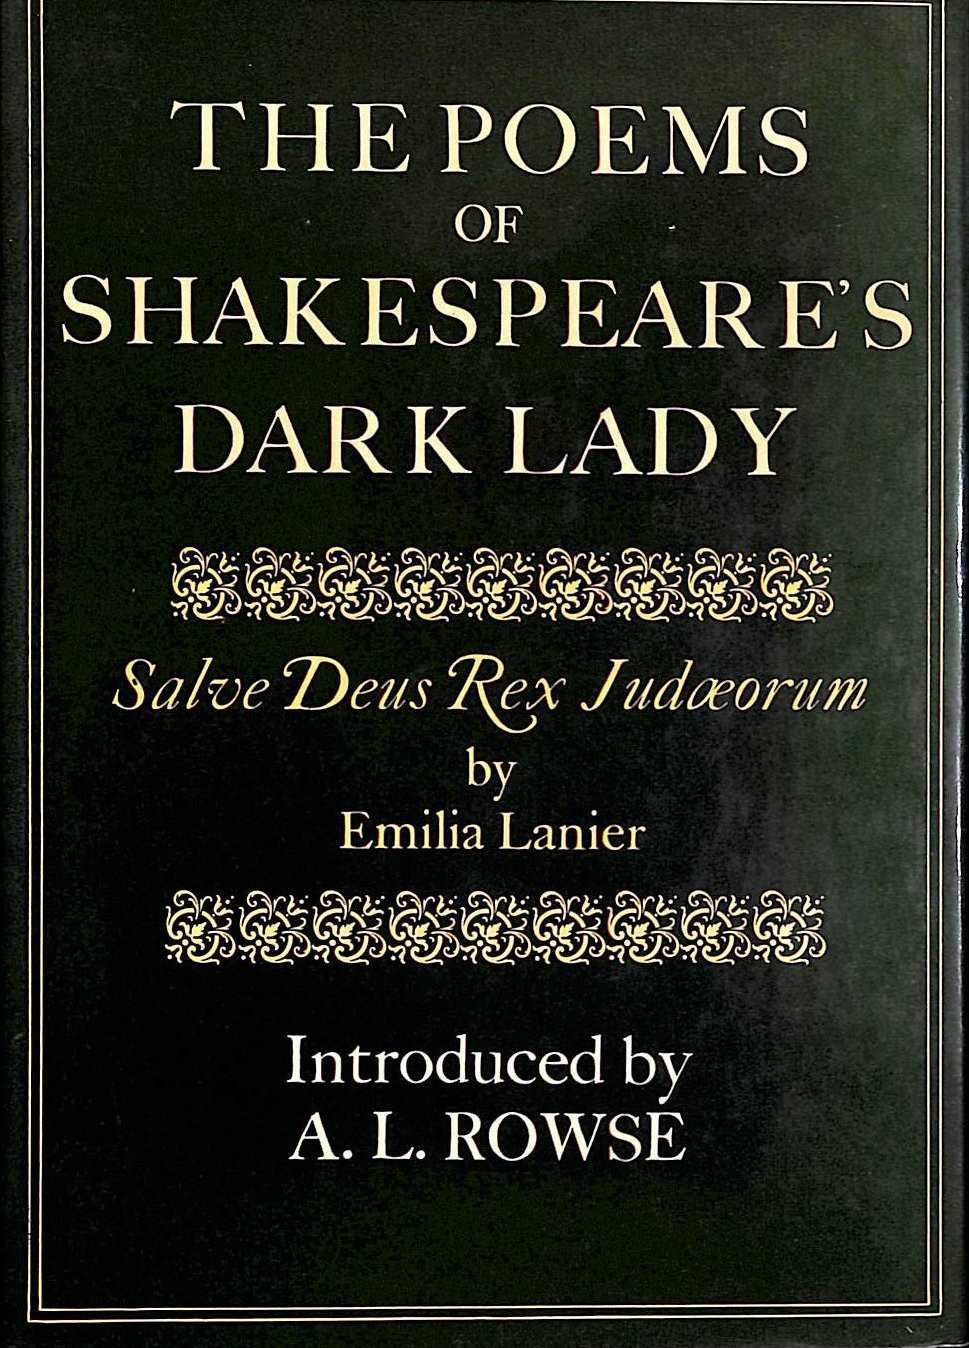 LANIER, EMILIA; ROWE, DR. ALFRED LESTIE [EDITOR] - Salve Deus Rex Judaeorum: Poems of Shakespeare's Dark Lady - Copy signed by AL Rowse